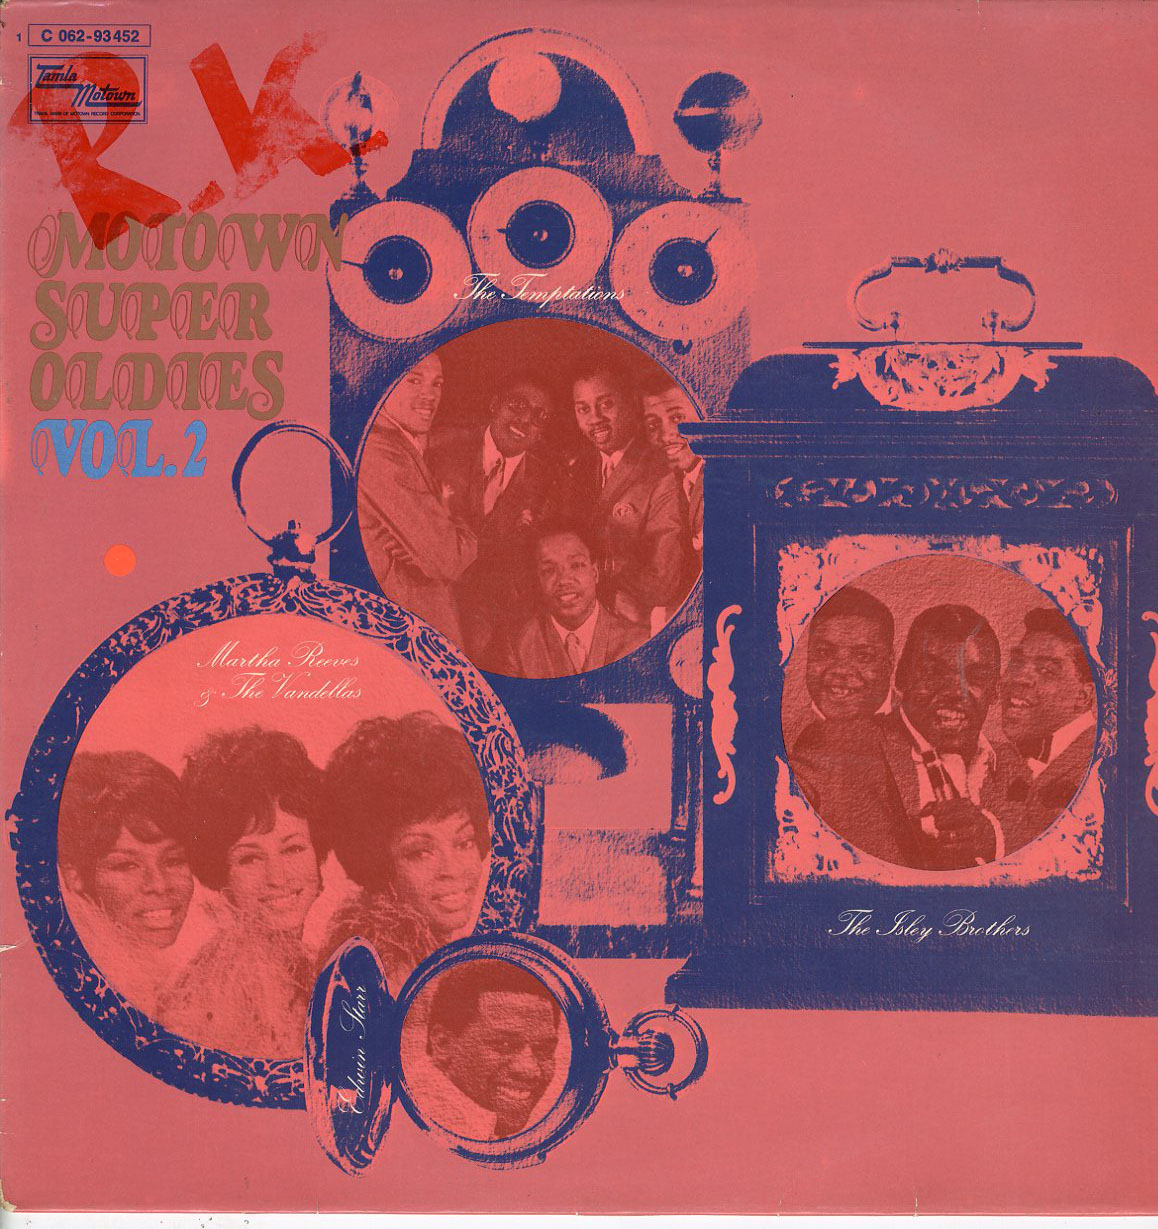 Albumcover Tamla Motown Sampler - Motown Super Oldies Vol. 2